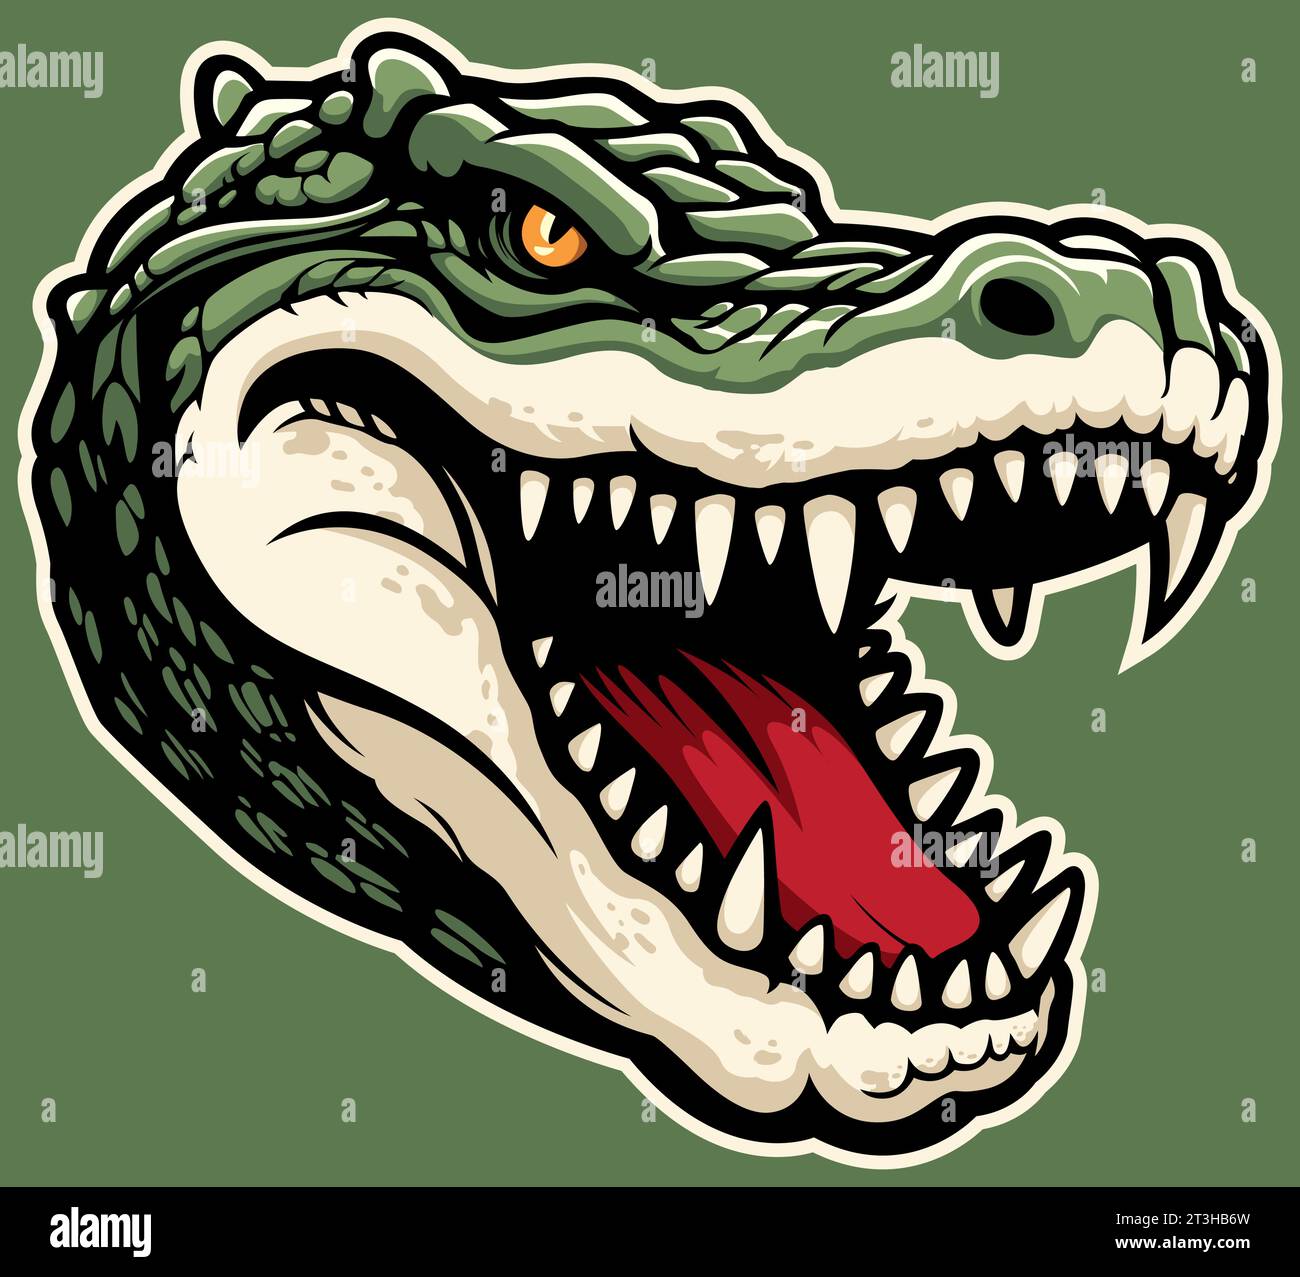 Mascot illustration of fierce crocodile head showing sharp teeth. Stock Vector